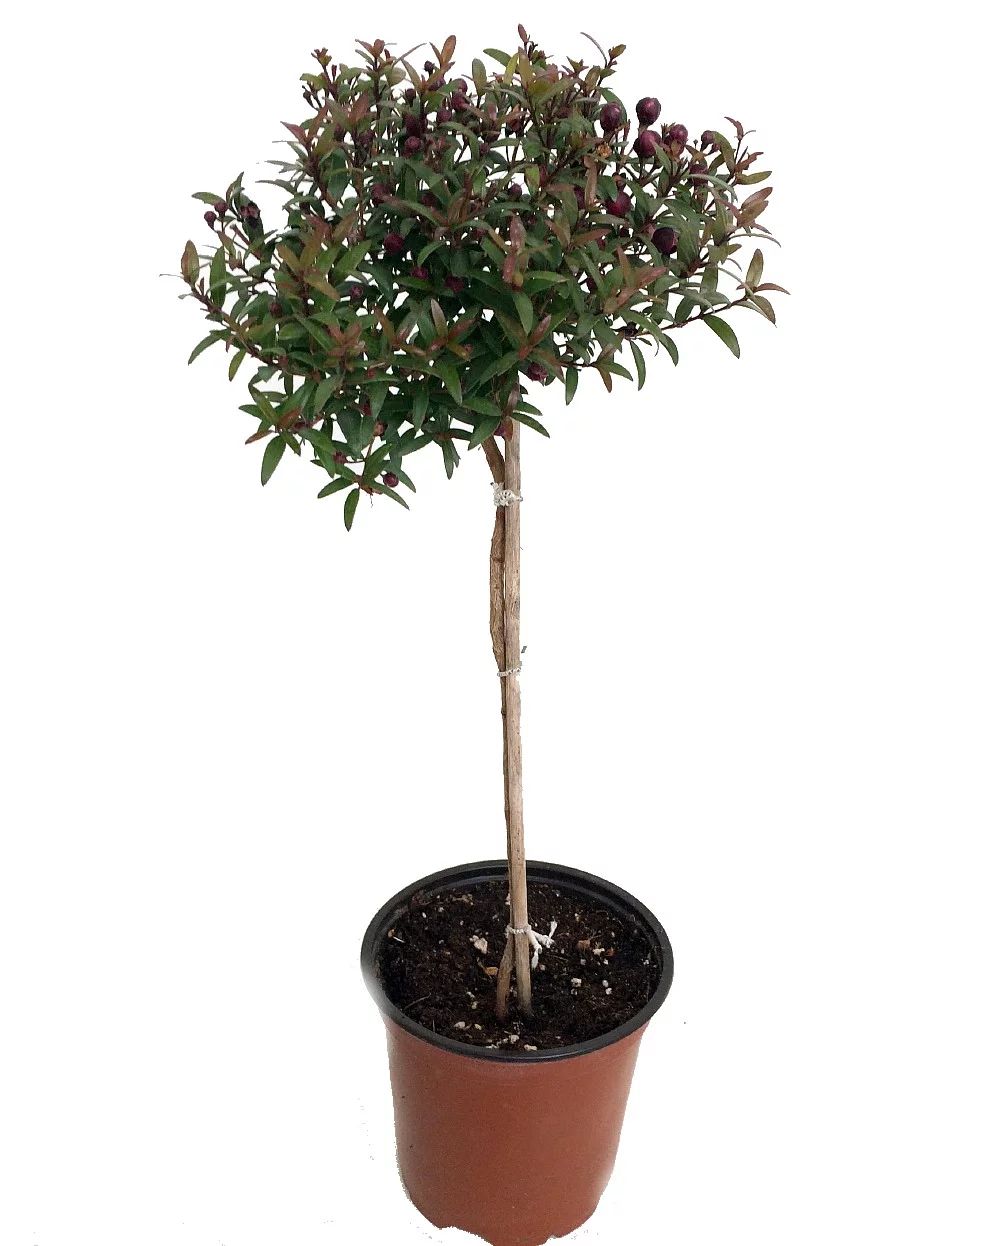 Biblical Myrtle Herb Plant - Myrtus - Ancient Herb - 4.5" Pot - Topiary | Walmart (US)